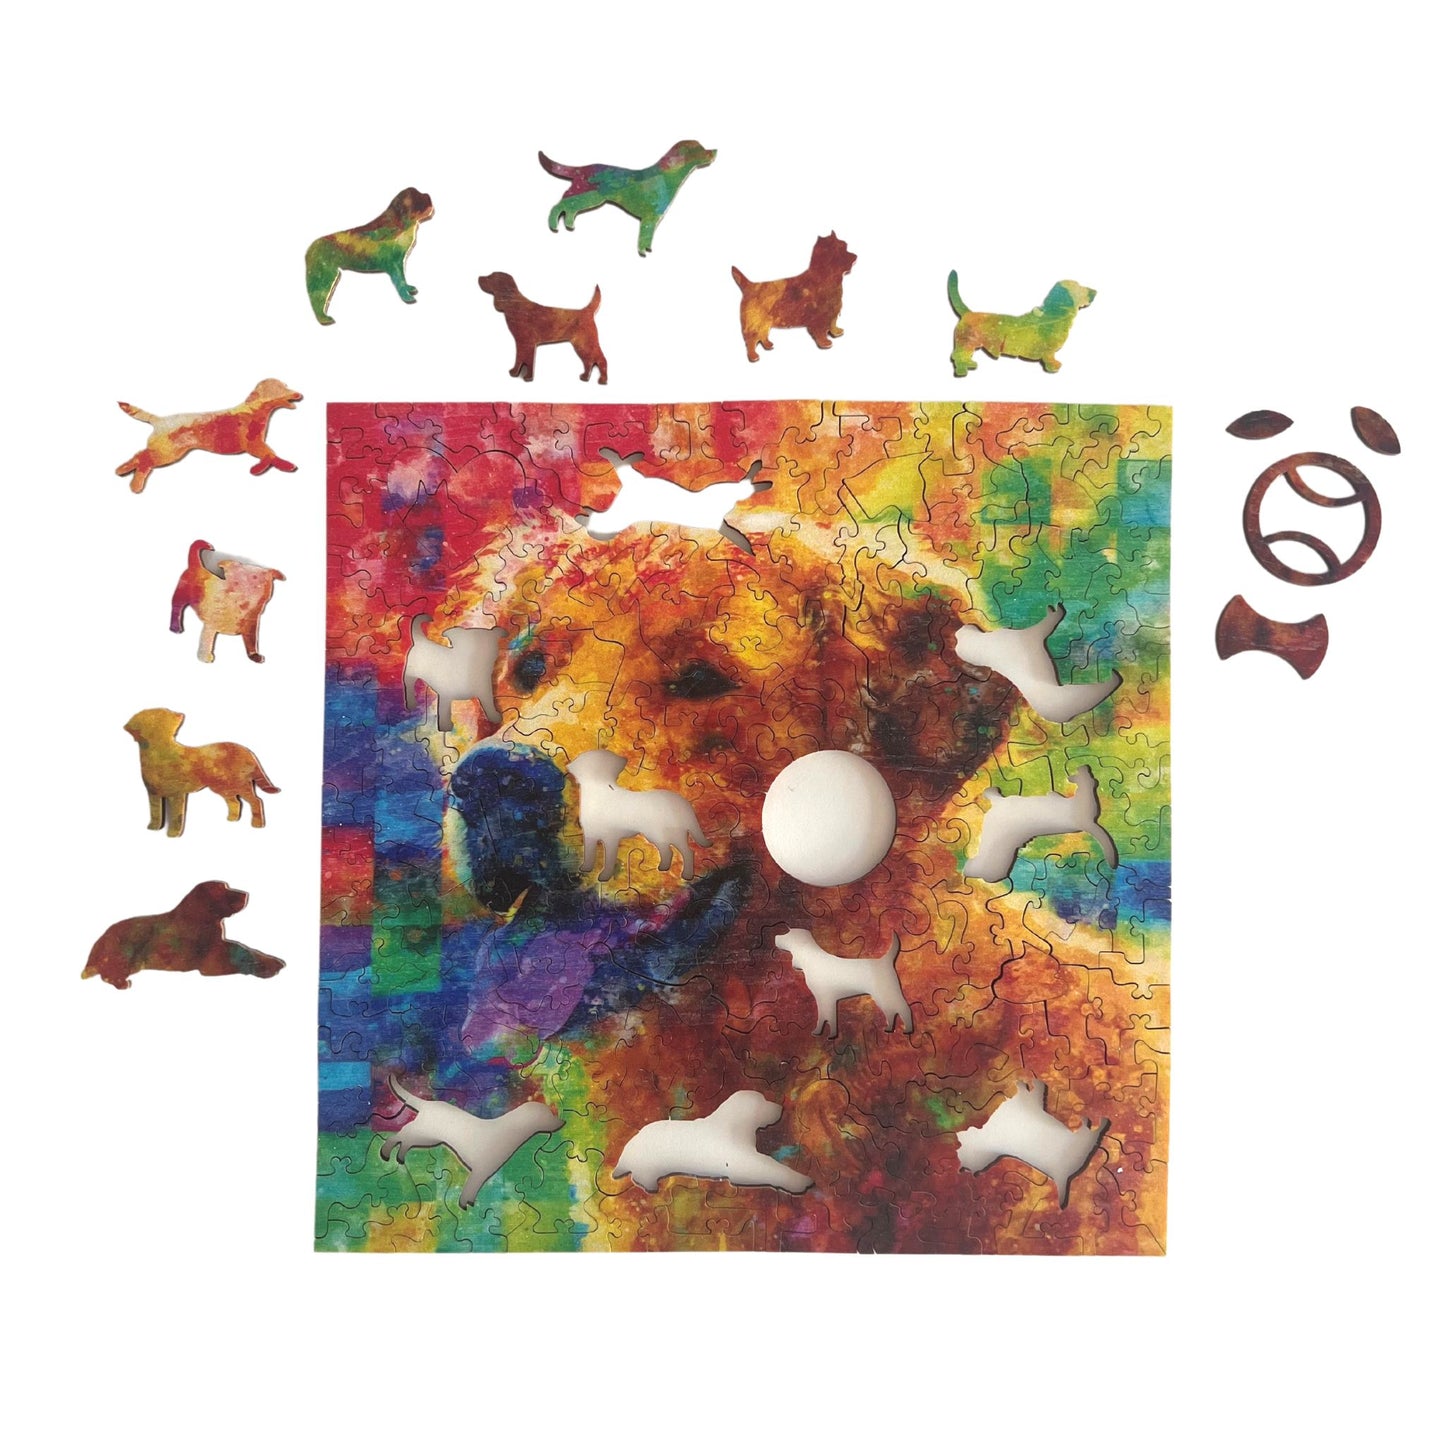 Wooden Jigsaw Puzzle - 202 pieces - Golden Retriever